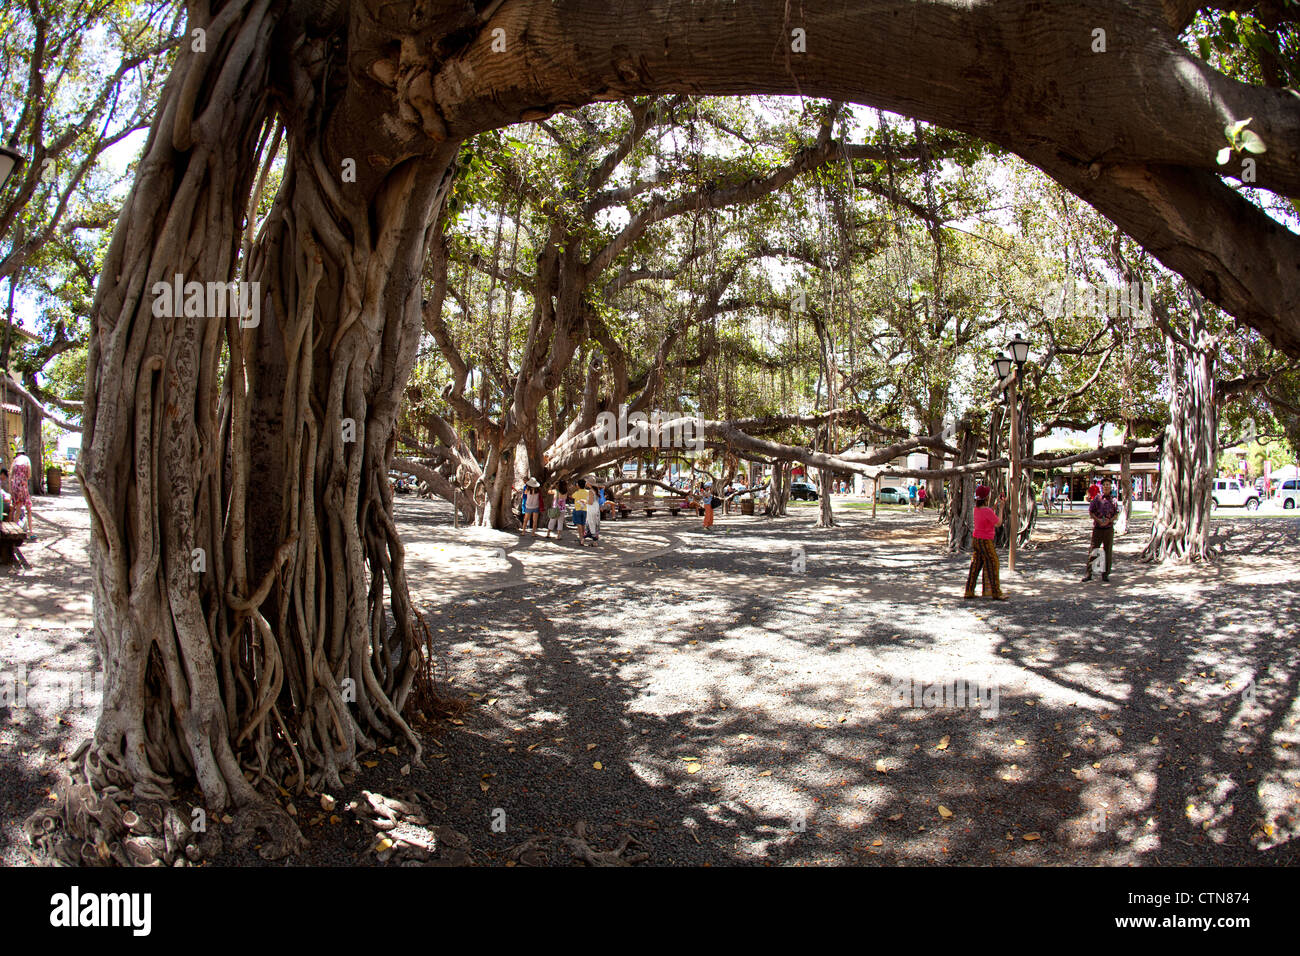 Large Banyan tree on island of Maui, Hawaii. Stock Photo